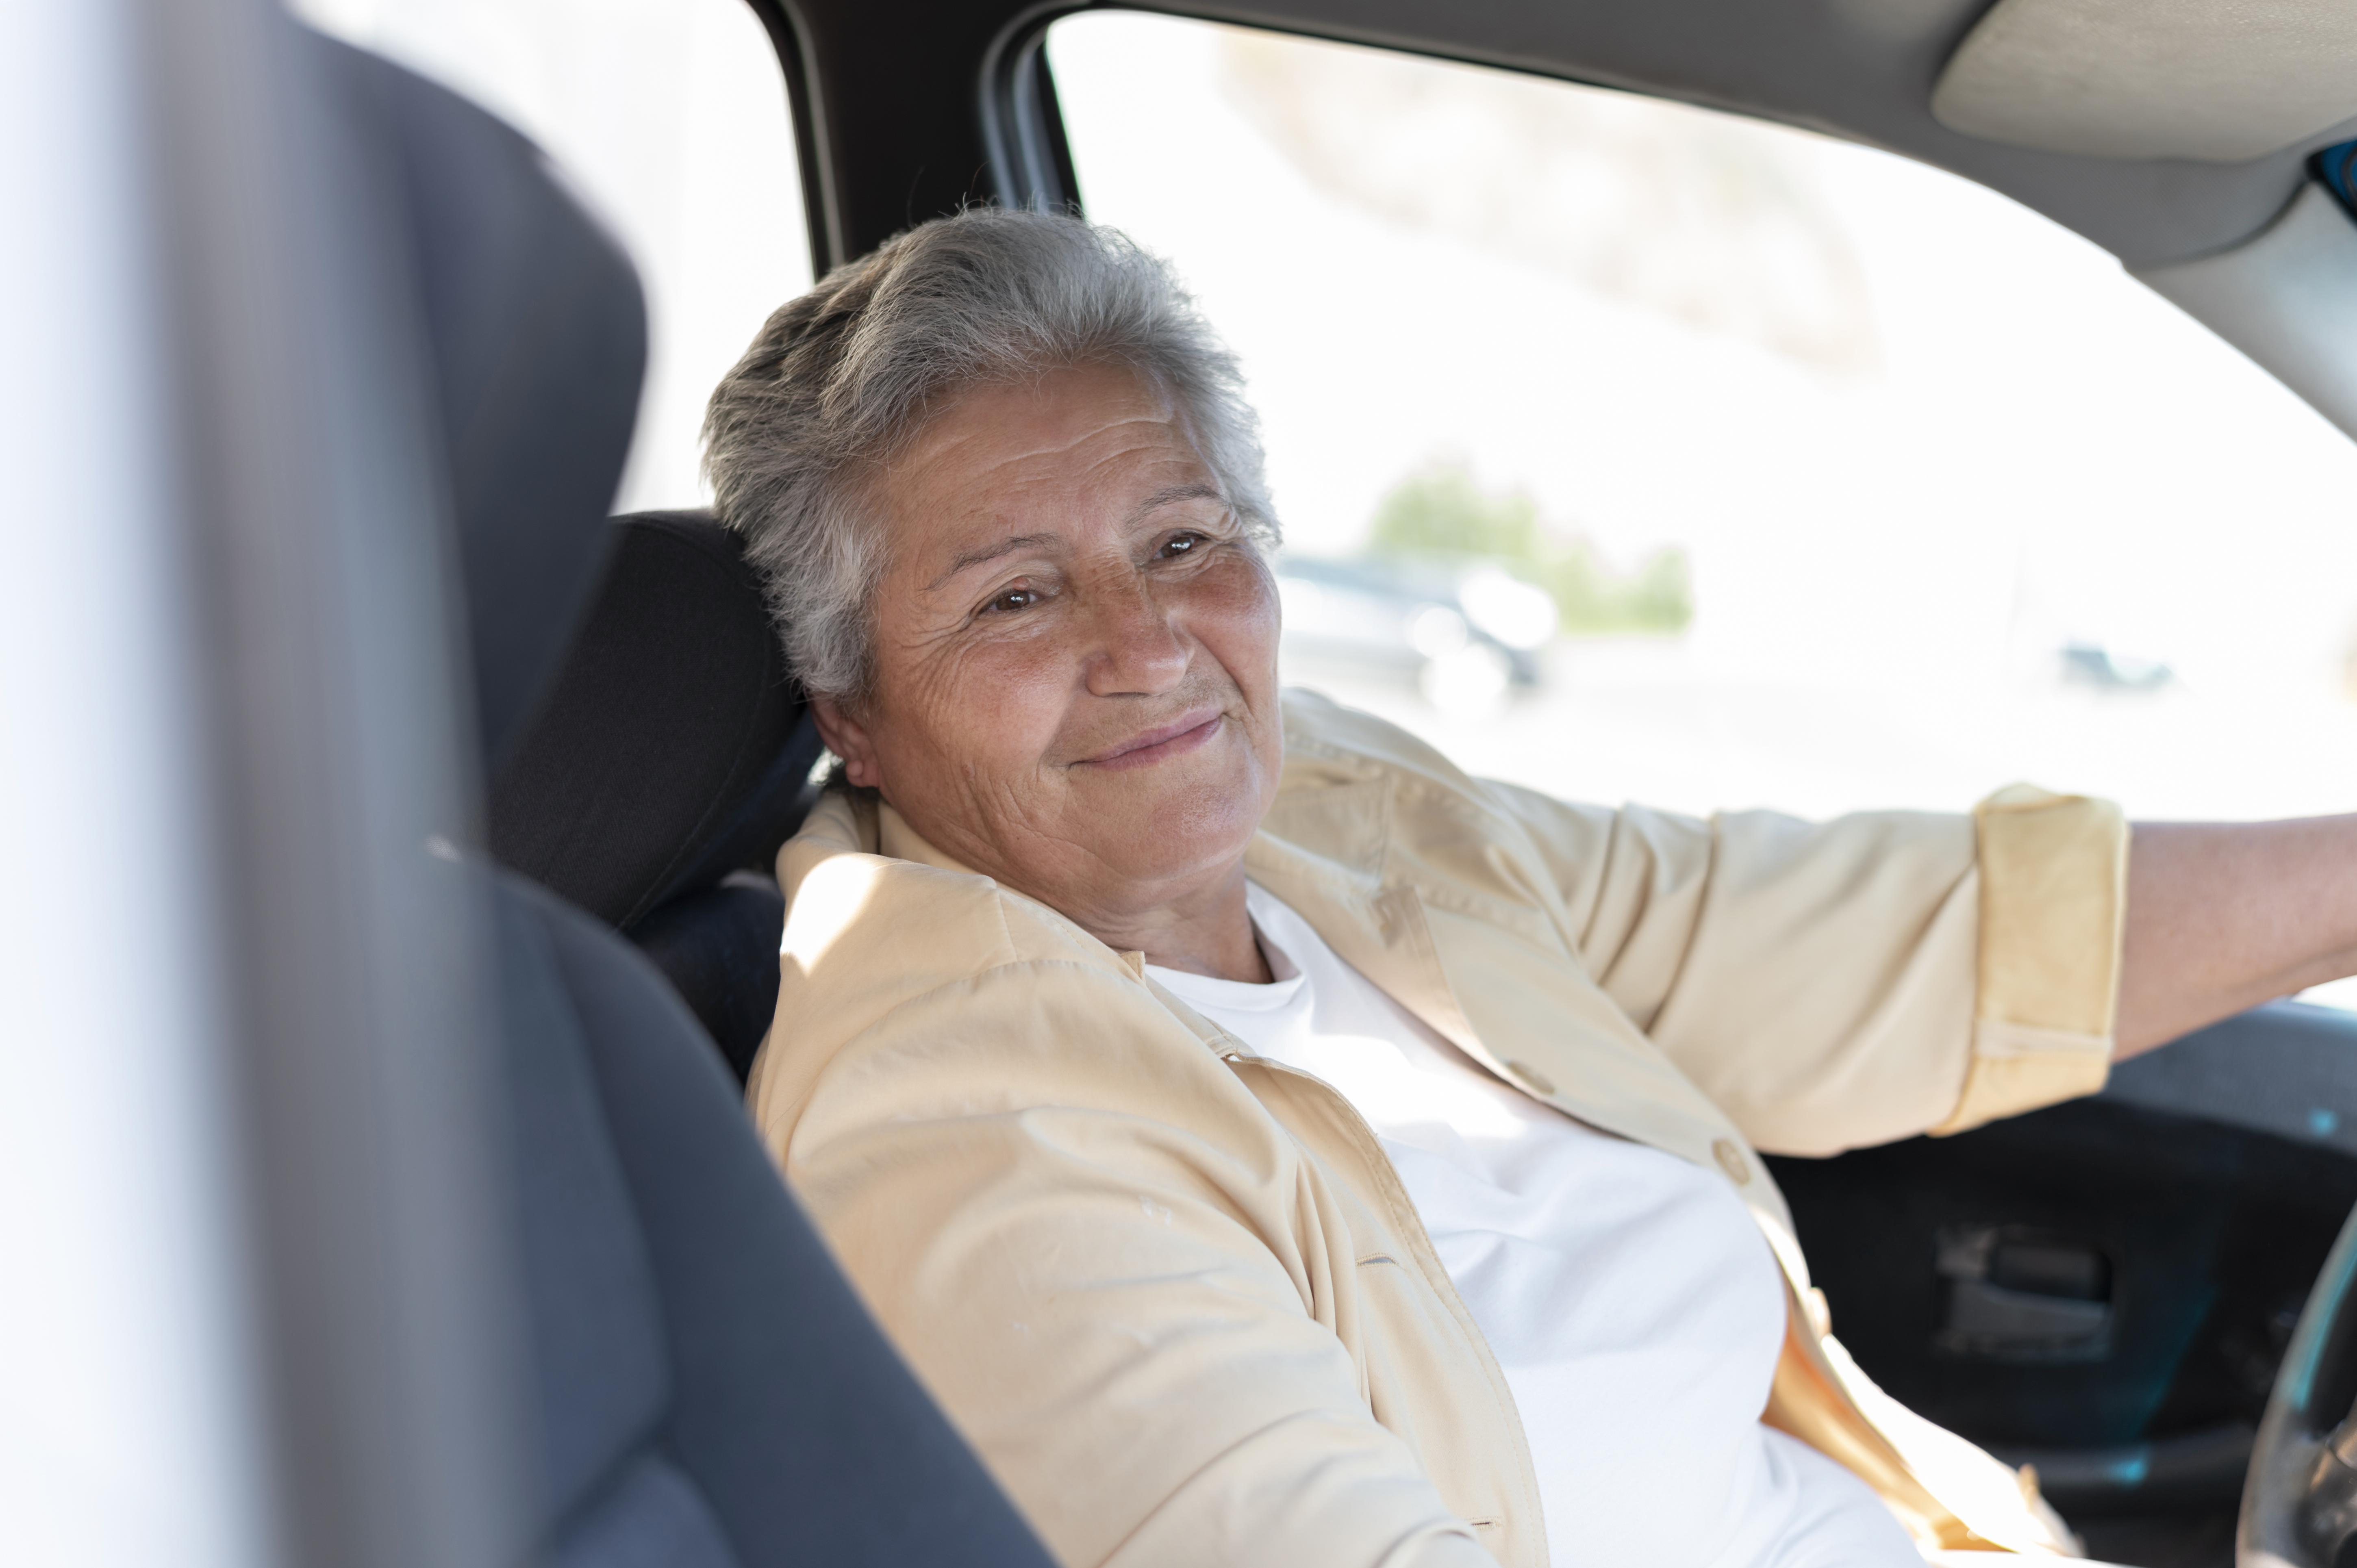 A senior woman driving a car | Source: Freepik